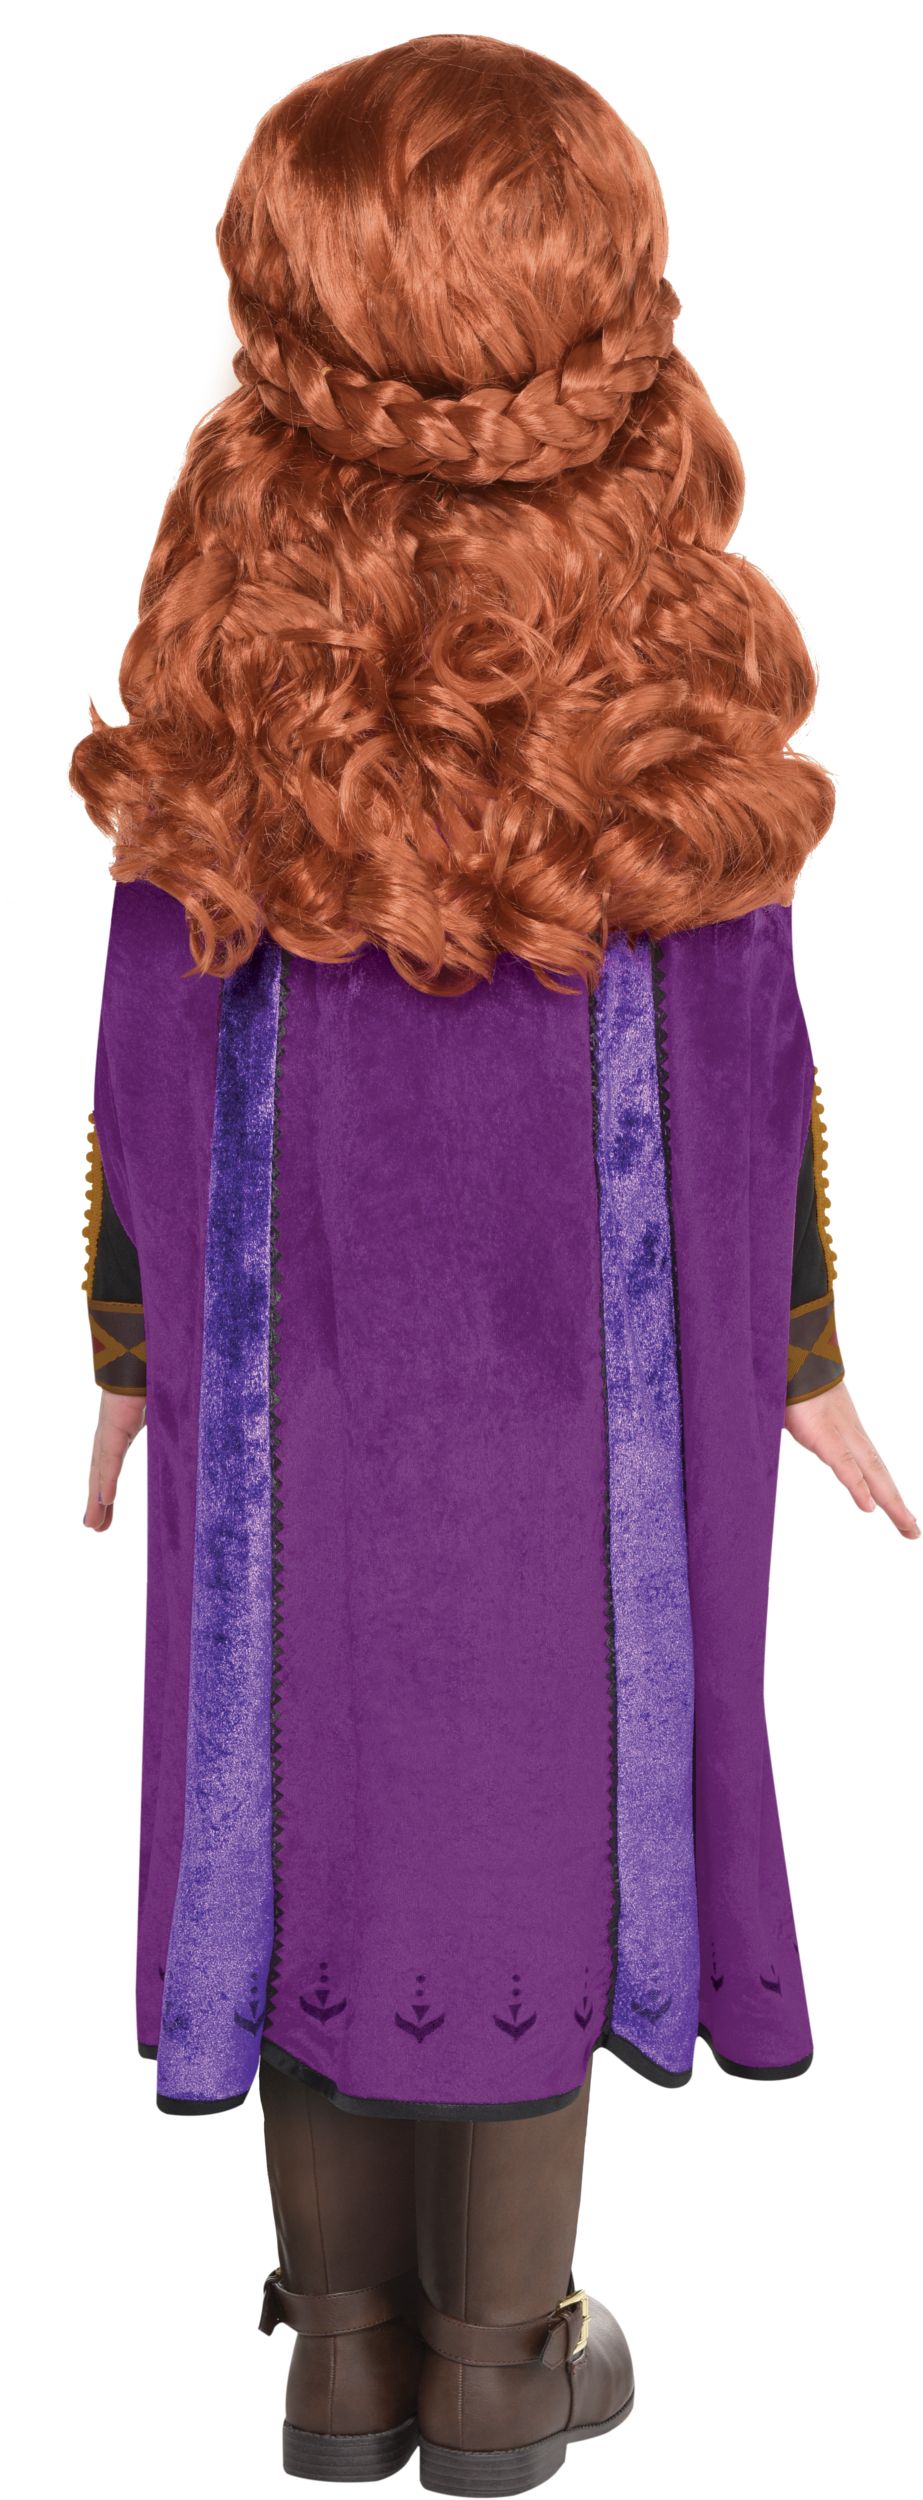 Costume Disney La Reine des neiges Anna, femmes, robe de reine d'Arendelle  violet, tailles variées